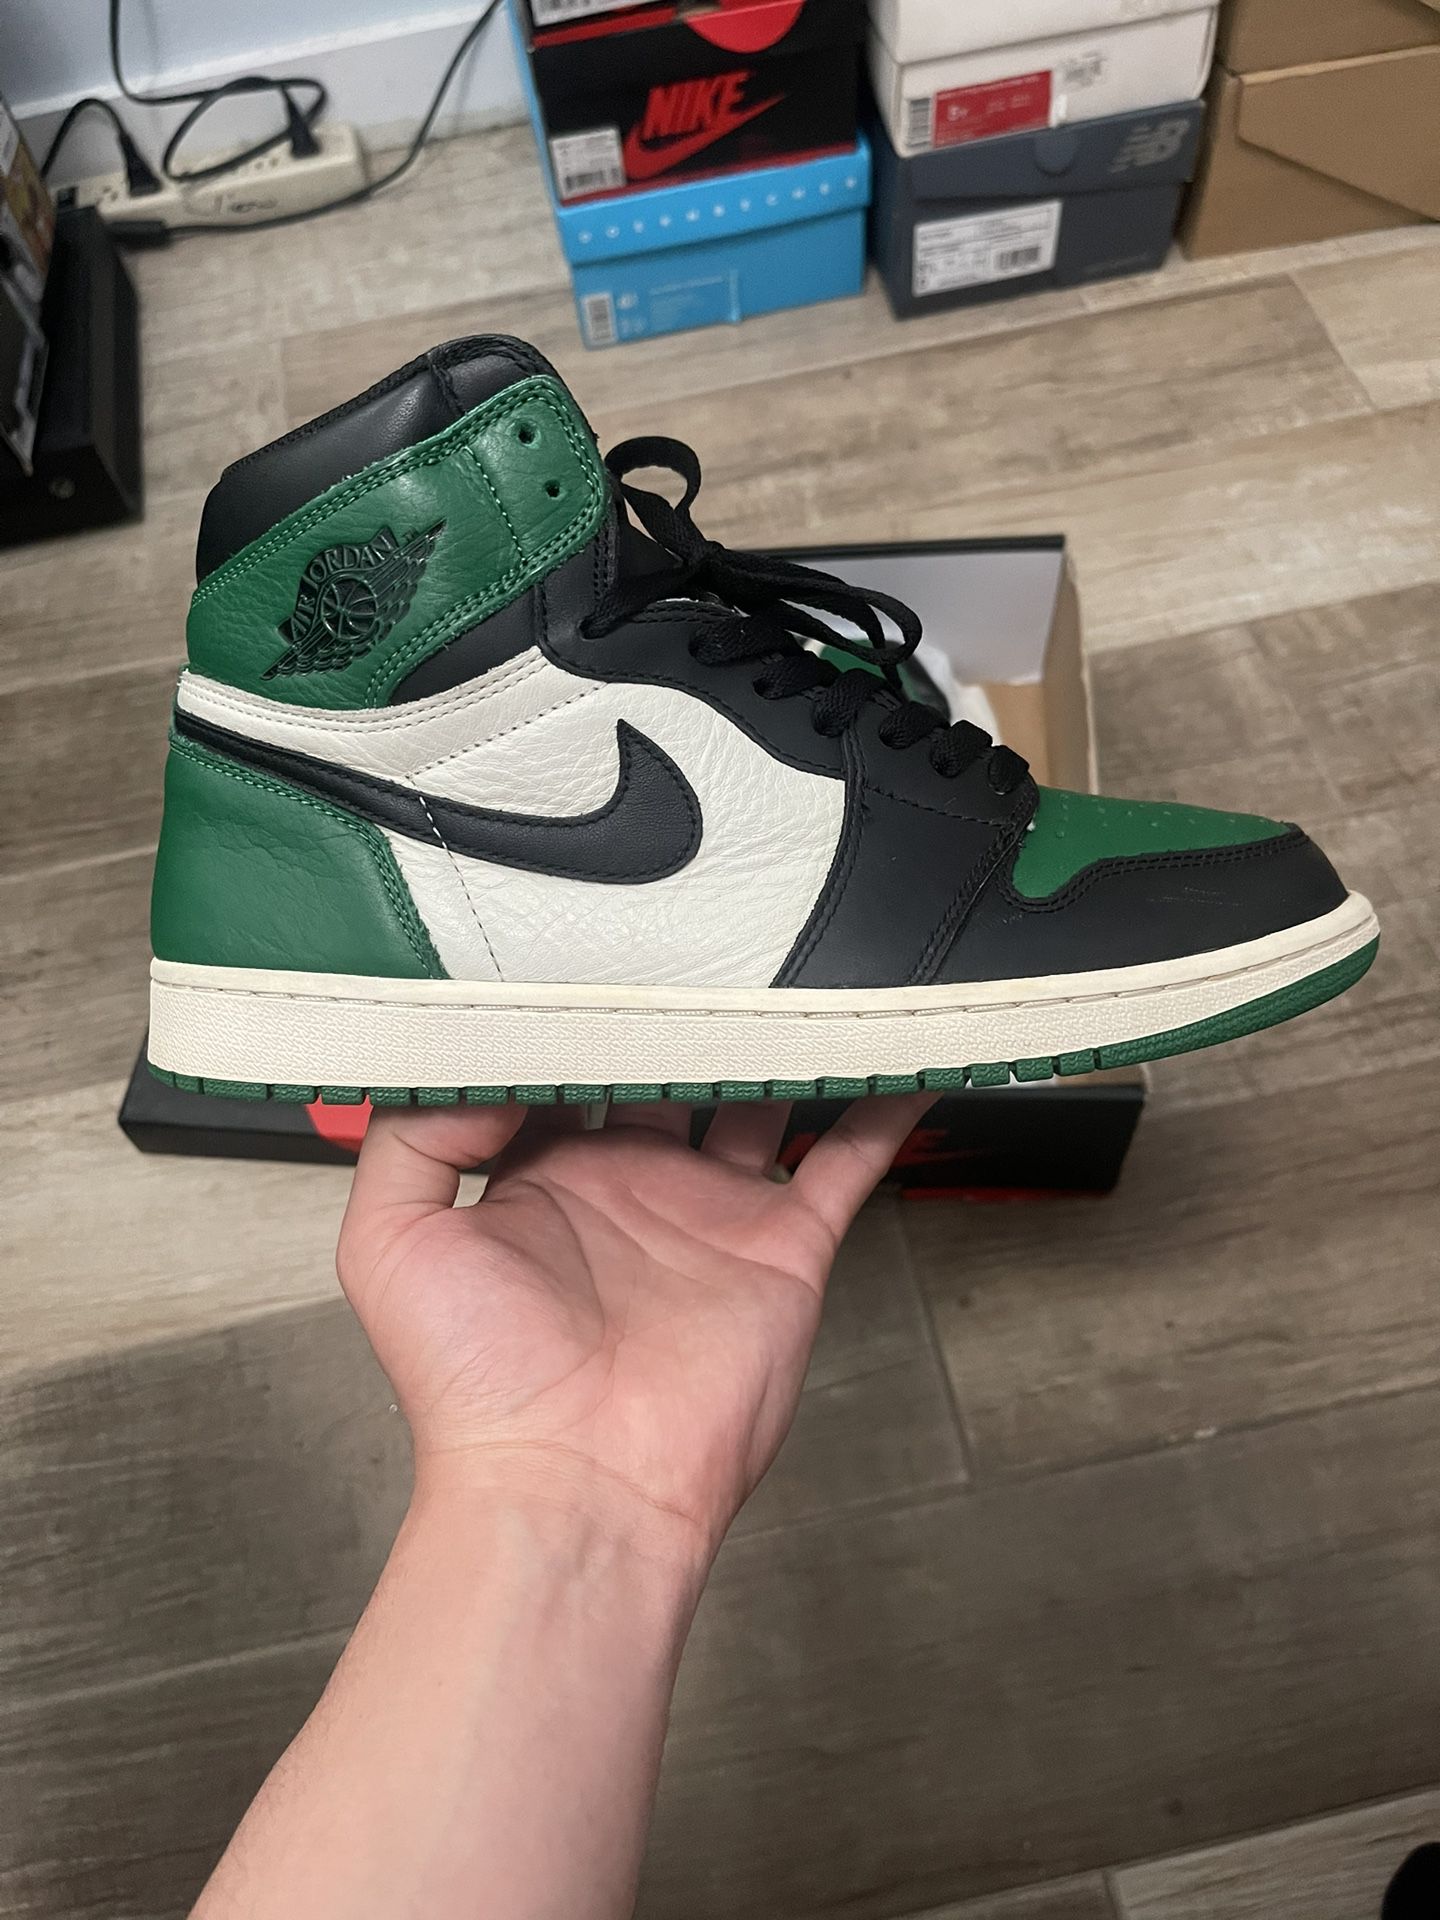 Air Jordan 1 “Pine Green” Size 10.5